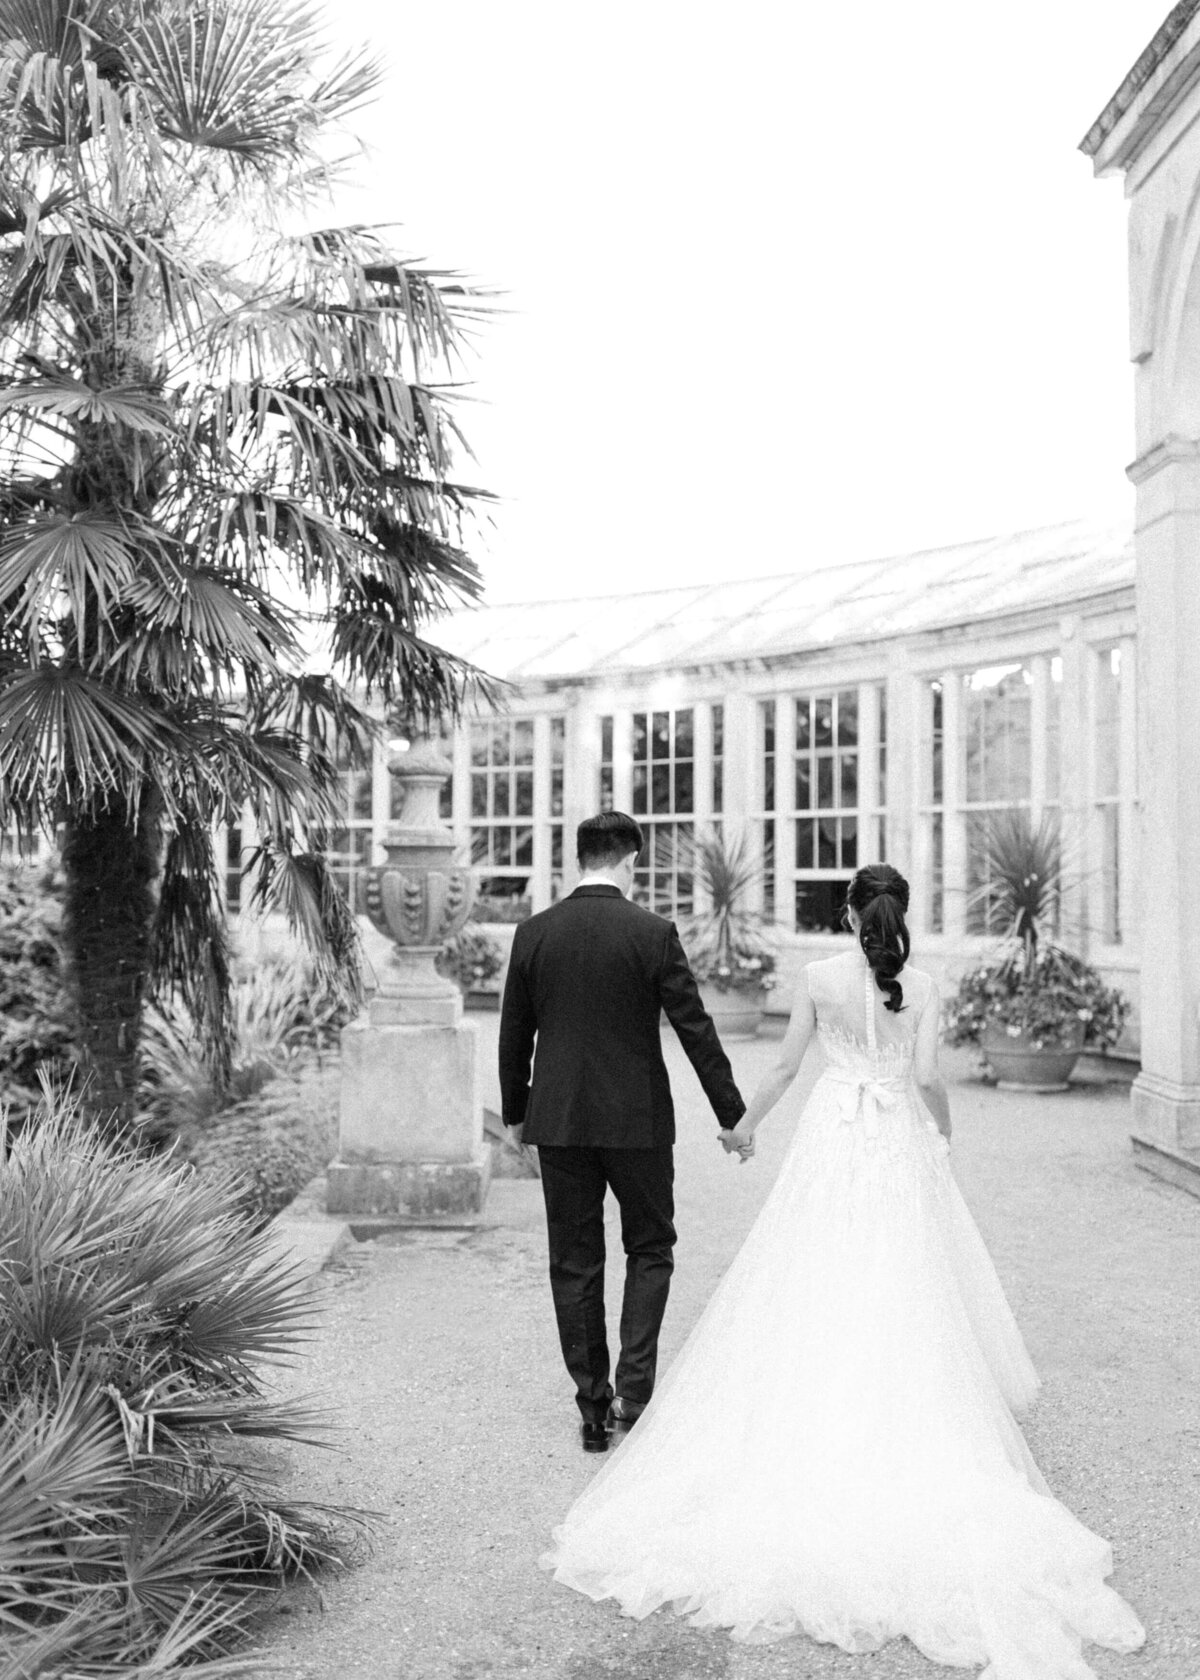 chloe-winstanley-weddings-syon-park-elie-saab-couple-walking-conservatory